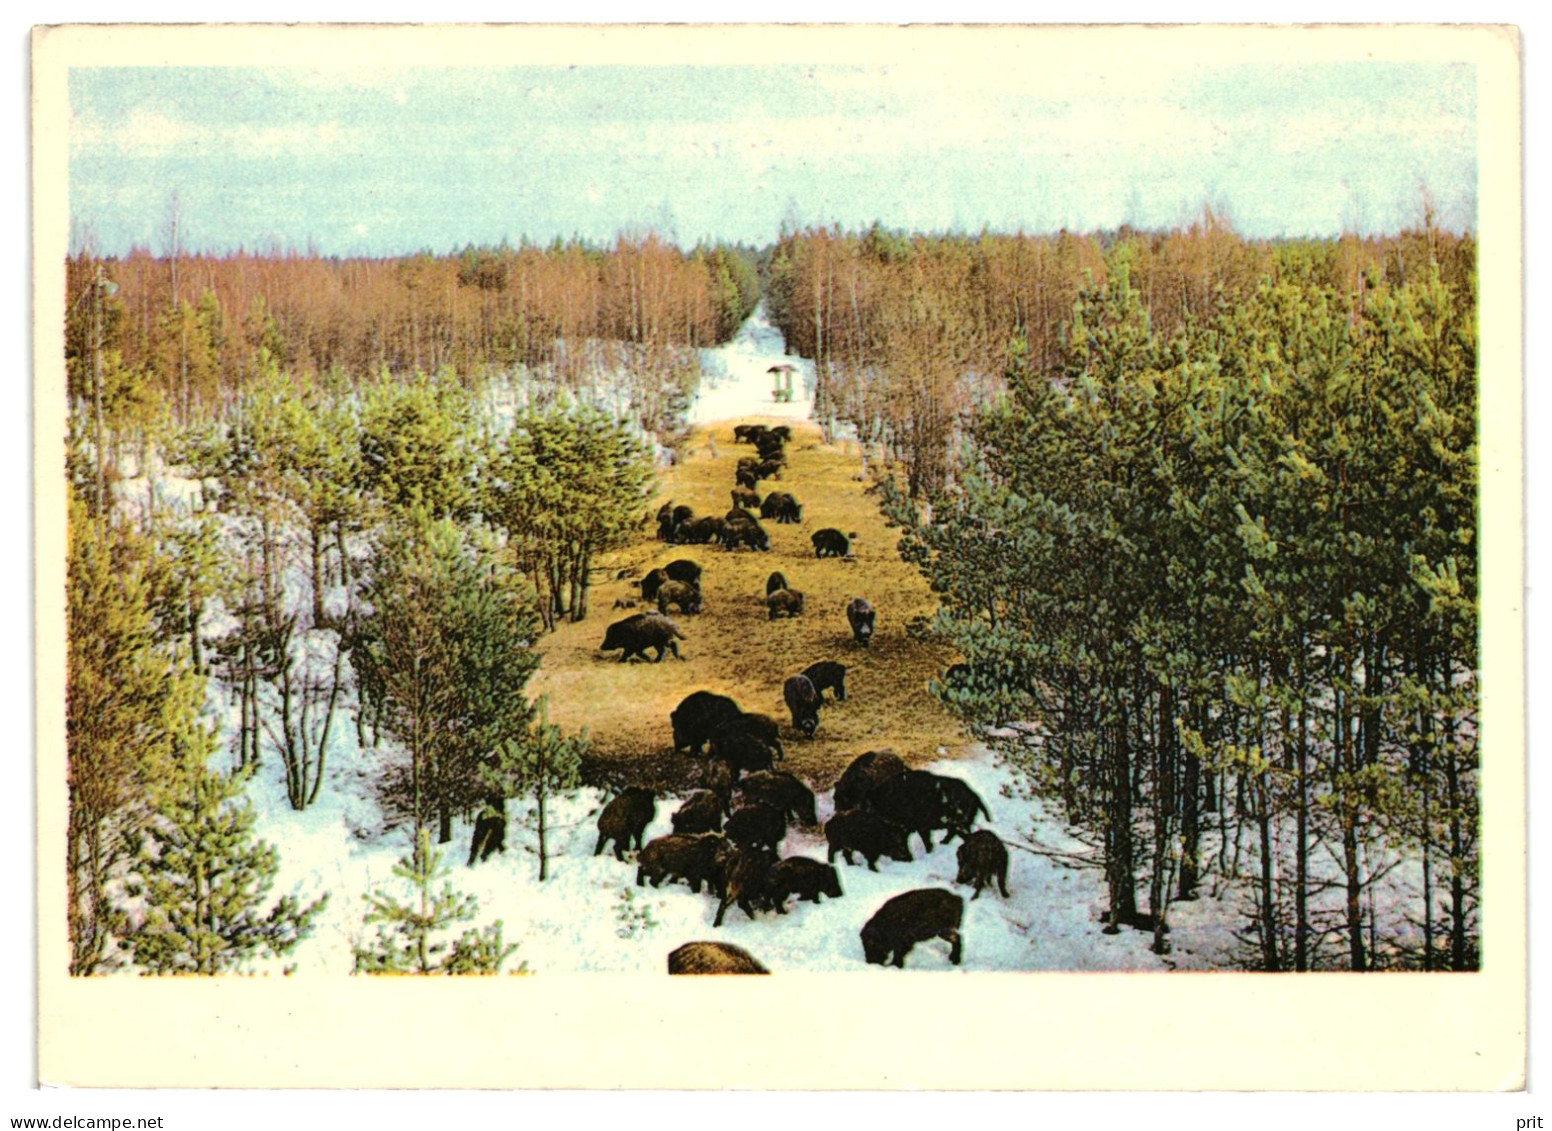 The Herd Of Wild Boars, Pigs, Winter Snow. Unused Postcard. Publisher Eesti Raamat, Tallinn Estonia 1983 - Cochons